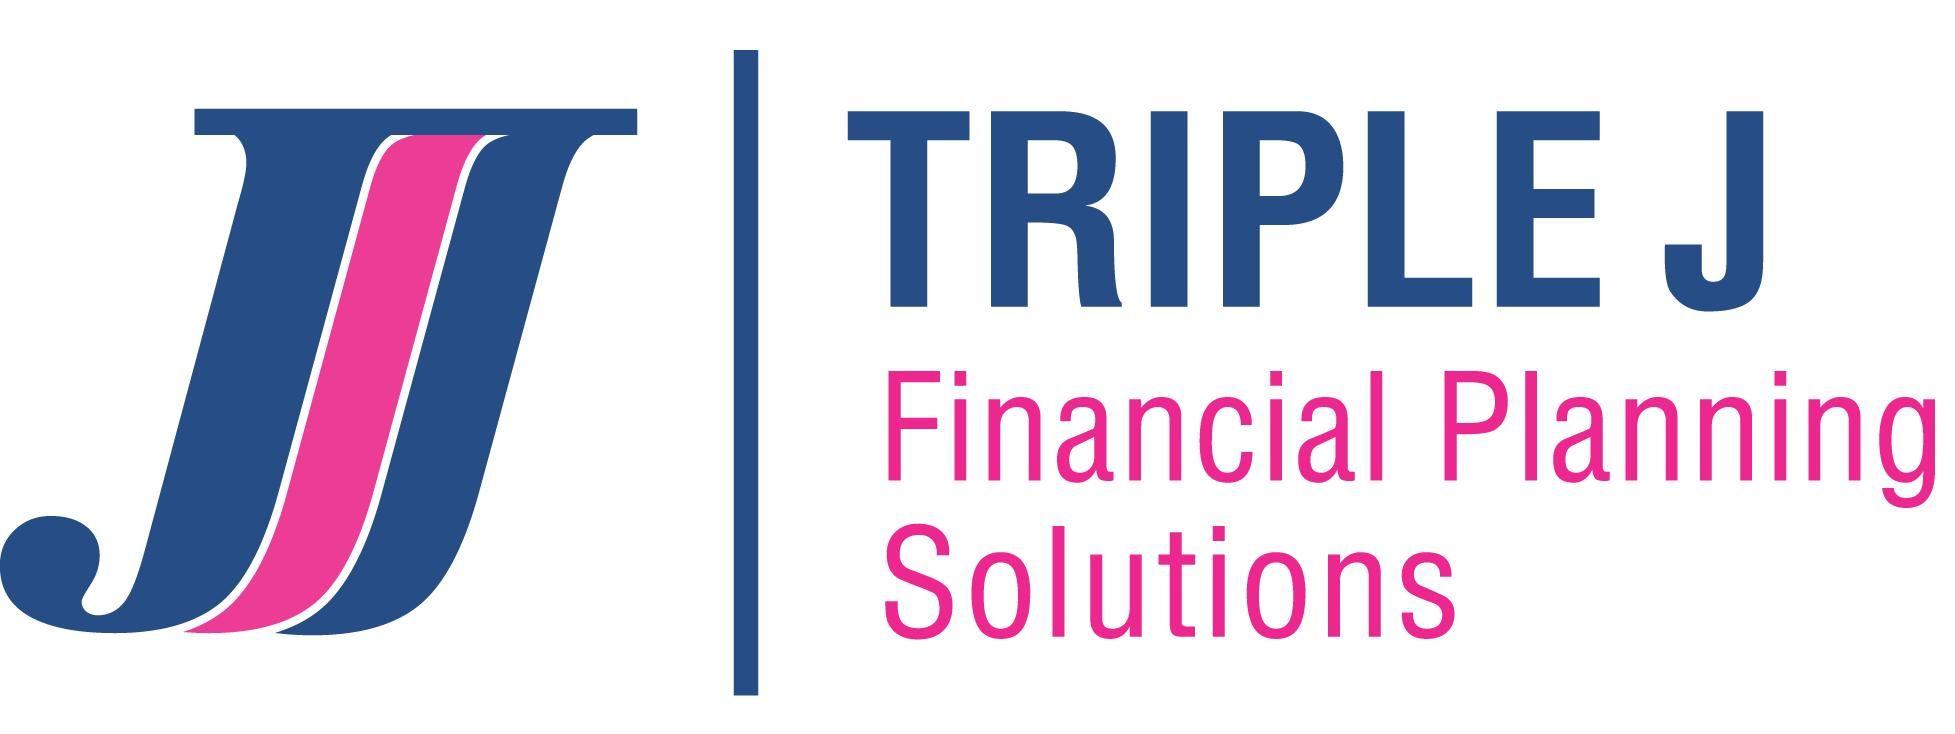 Jjj Logo - Home. Triple J Financial Planning Solutions